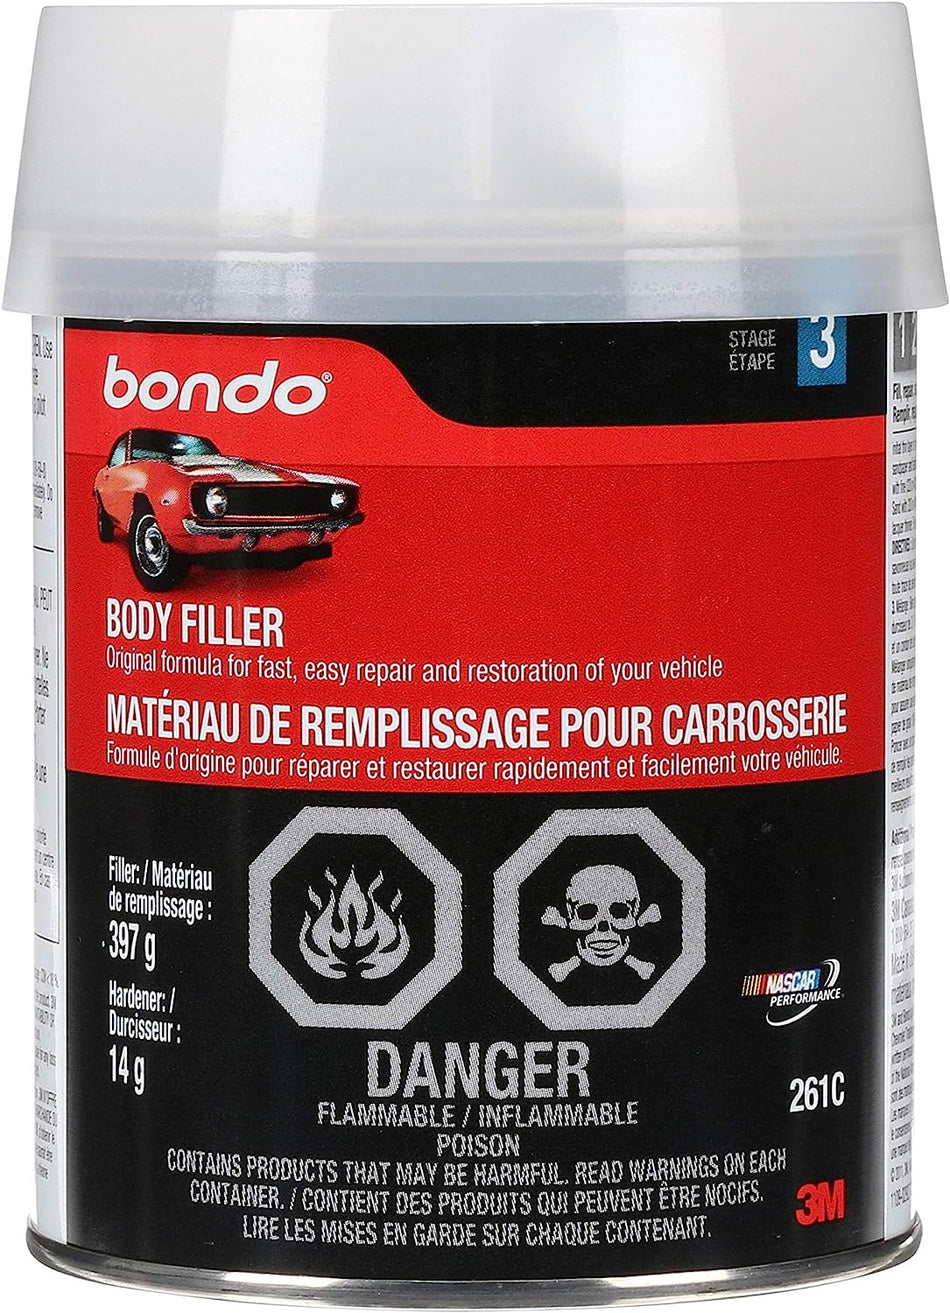 Bondo Body Filler, Original Formula for Fast, Easy Repair & Restoration of Your Vehicle, 14 oz with 0.5 oz Hardener